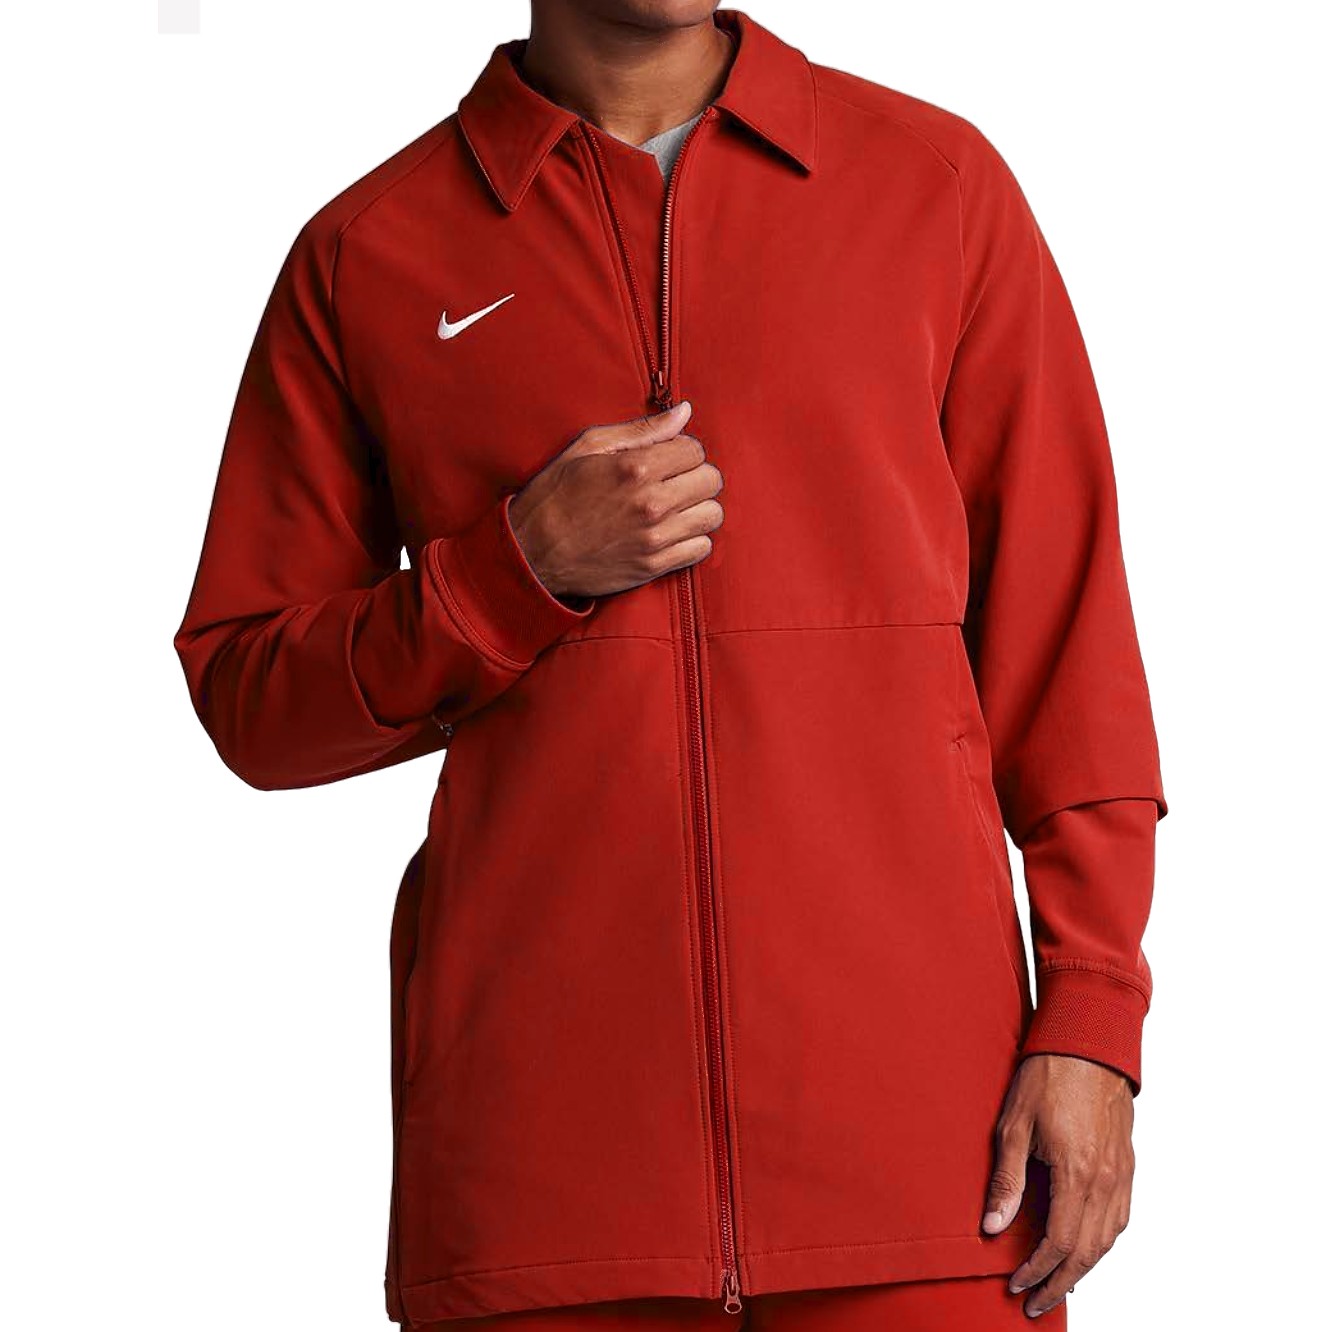 Nike Team Mens Scarlet Red Therma Midweight Full Zip Track Jacket $135